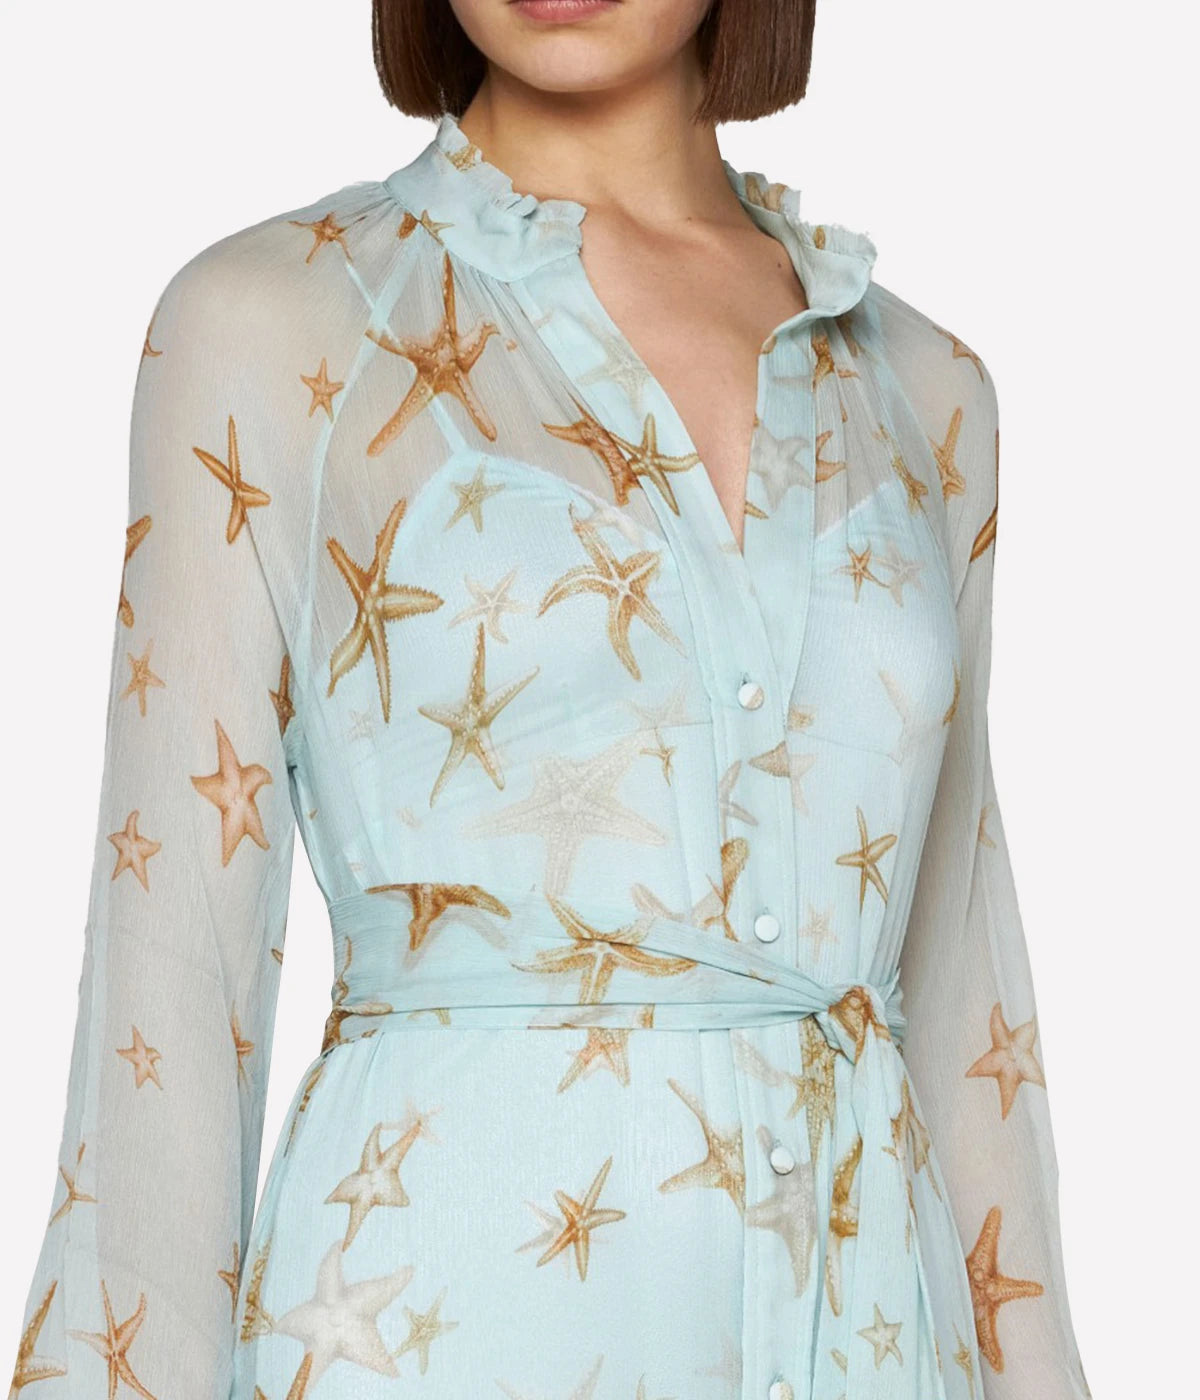 Riviera Long Dress in Aqua Starfishes